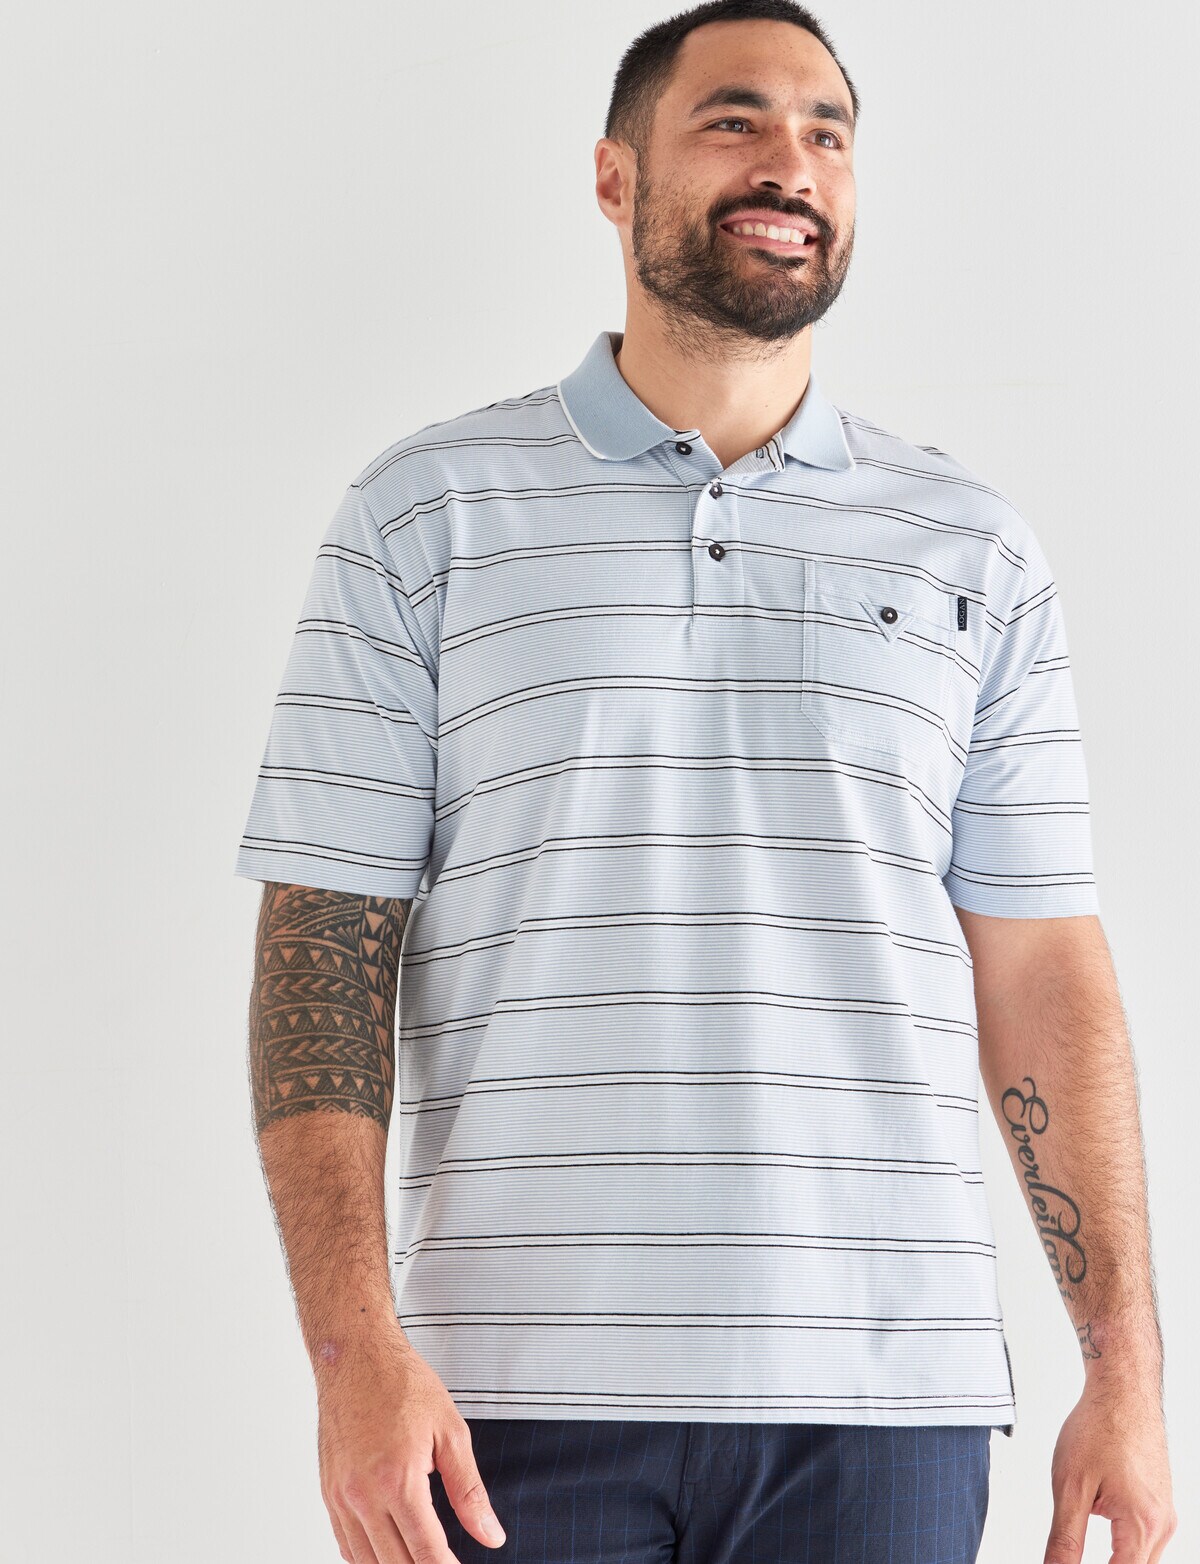 Logan Mendin Short Sleeve Polo Shirt, Grey - T-shirts, Singlets & Polos